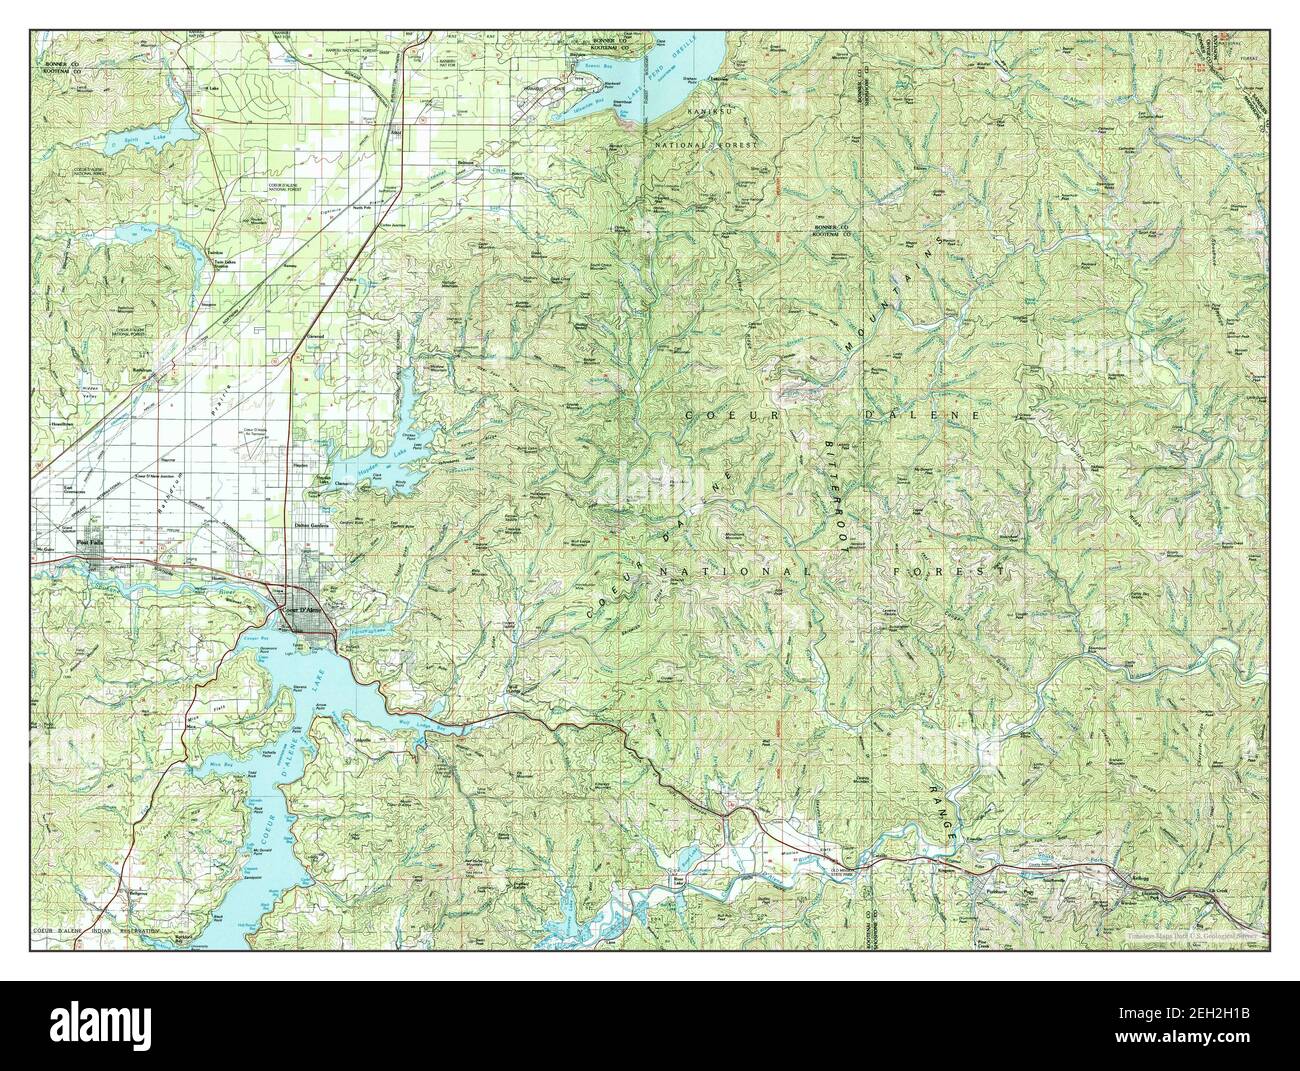 Coeur DAlene, Idaho, map 1987, 1:100000, United States of America by Timeless Maps, data U.S. Geological Survey Stock Photo